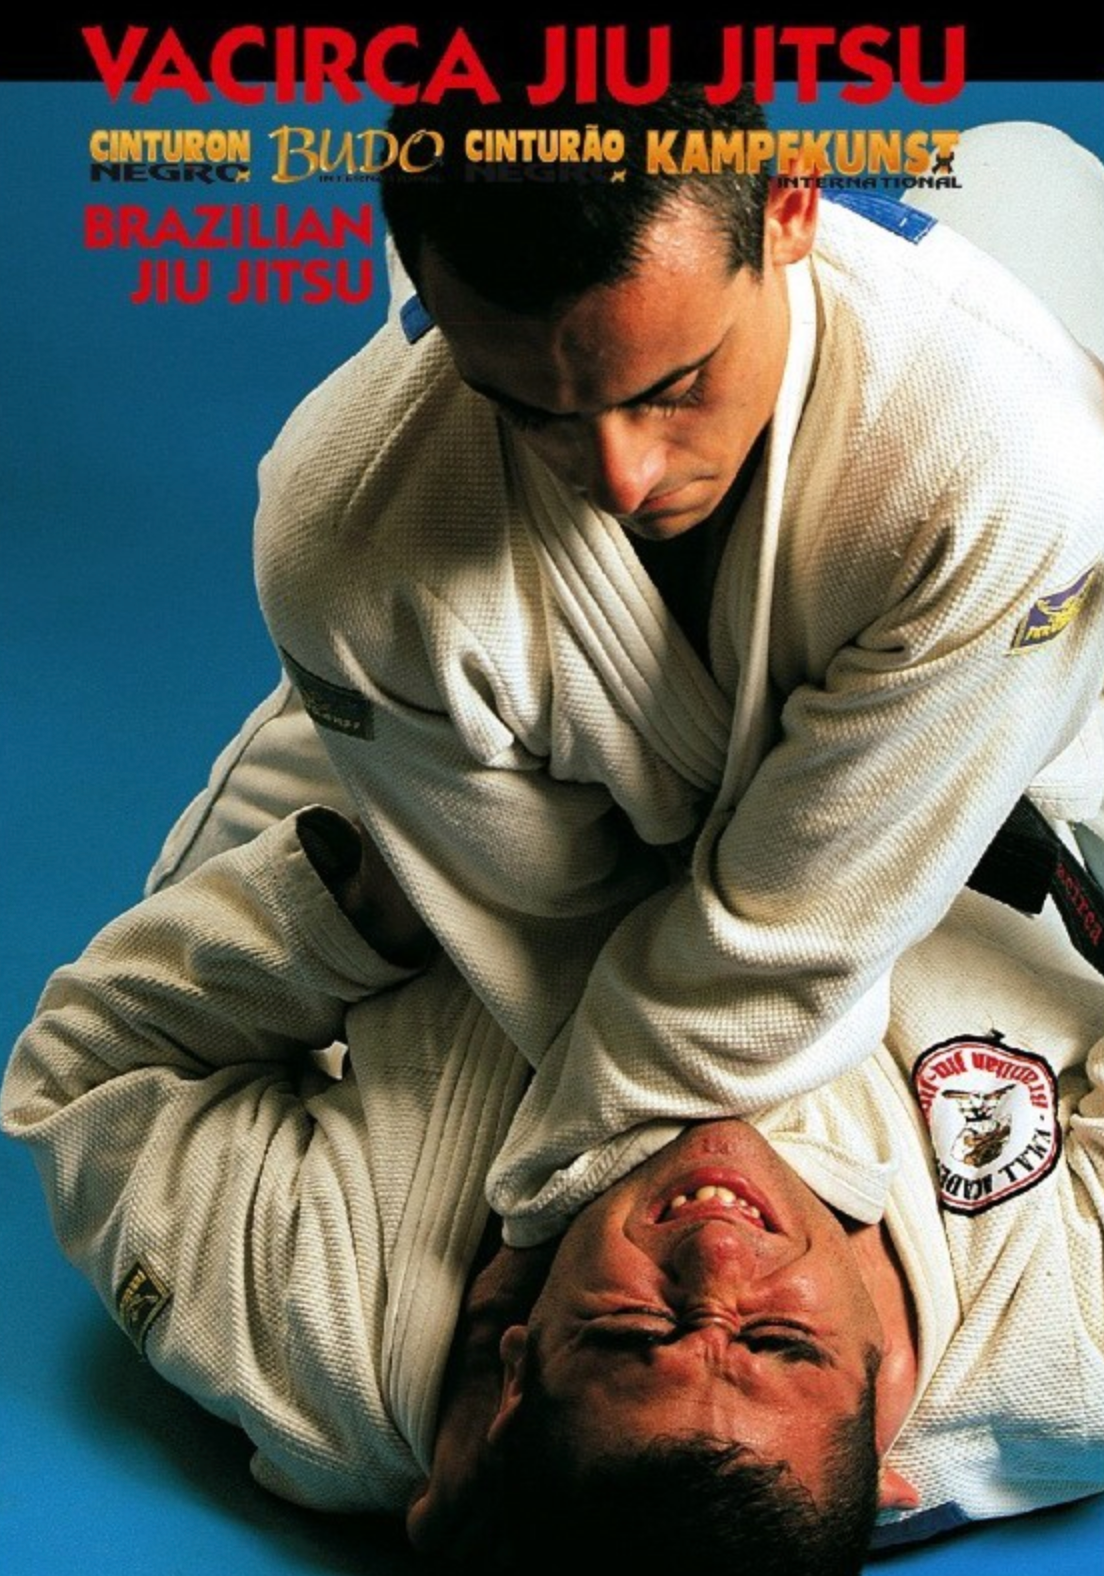 Brazilian Jiu Jitsu Blue Belt Program DVD by the Vacirca Brothers - Budovideos Inc